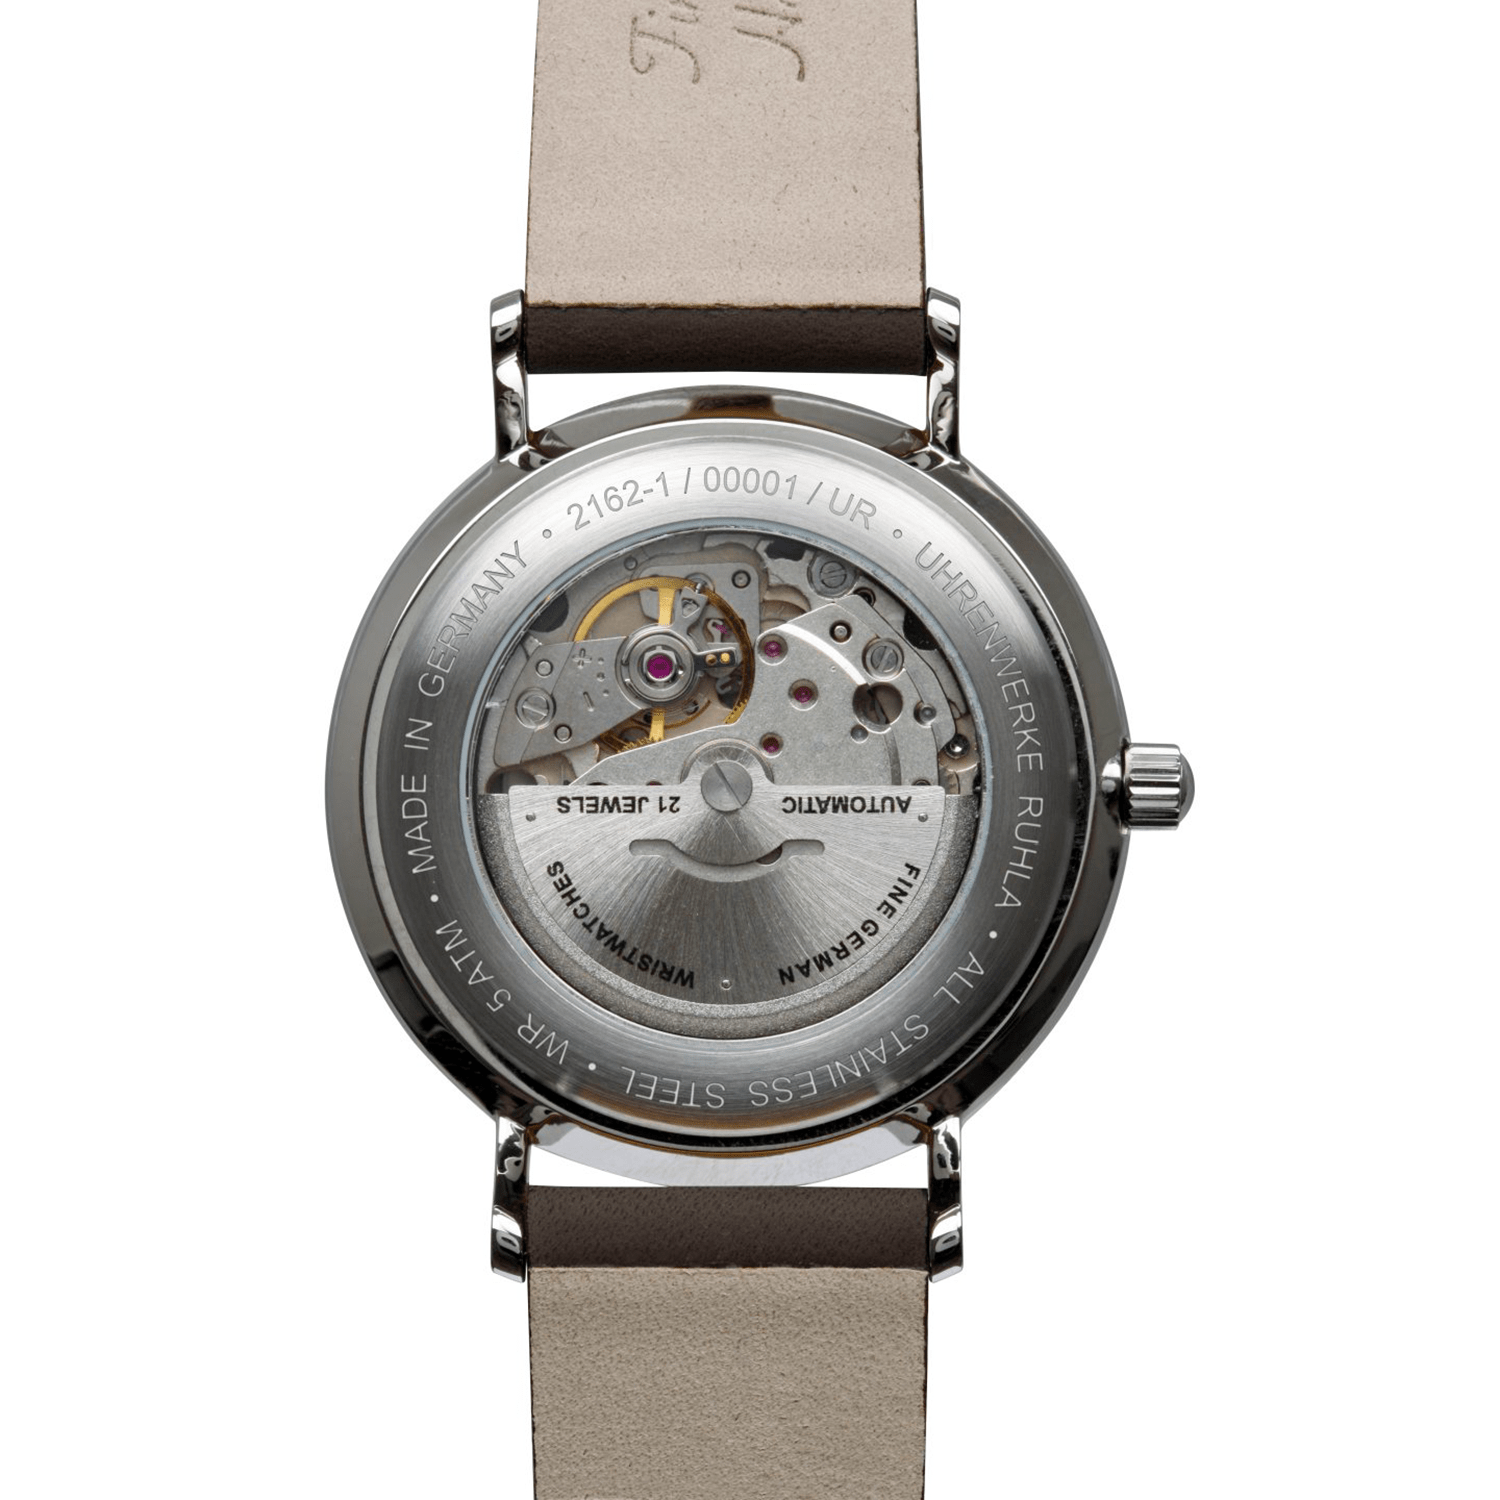 how influenced design the Watch Bauhaus Bauhaus history 21621. Discover